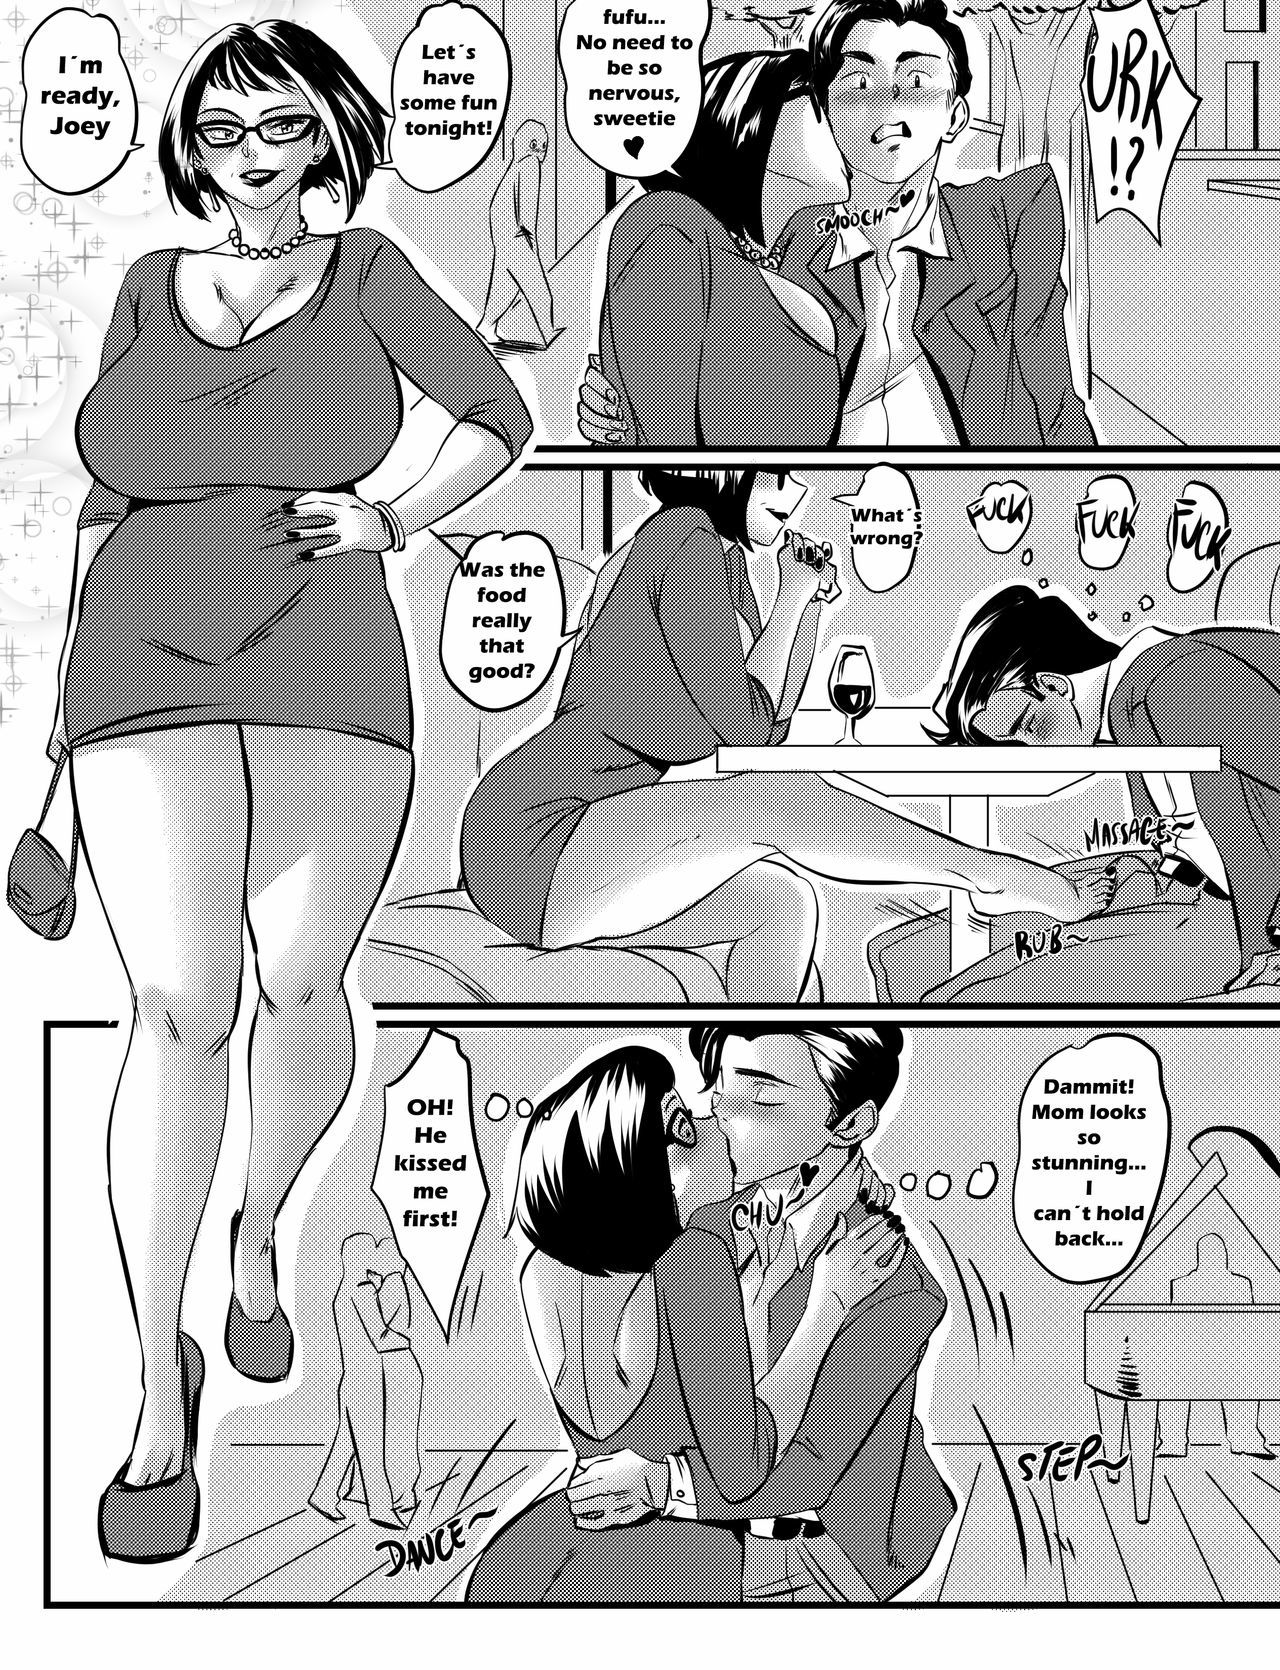 Frosty Date Night by Aarokira page 5